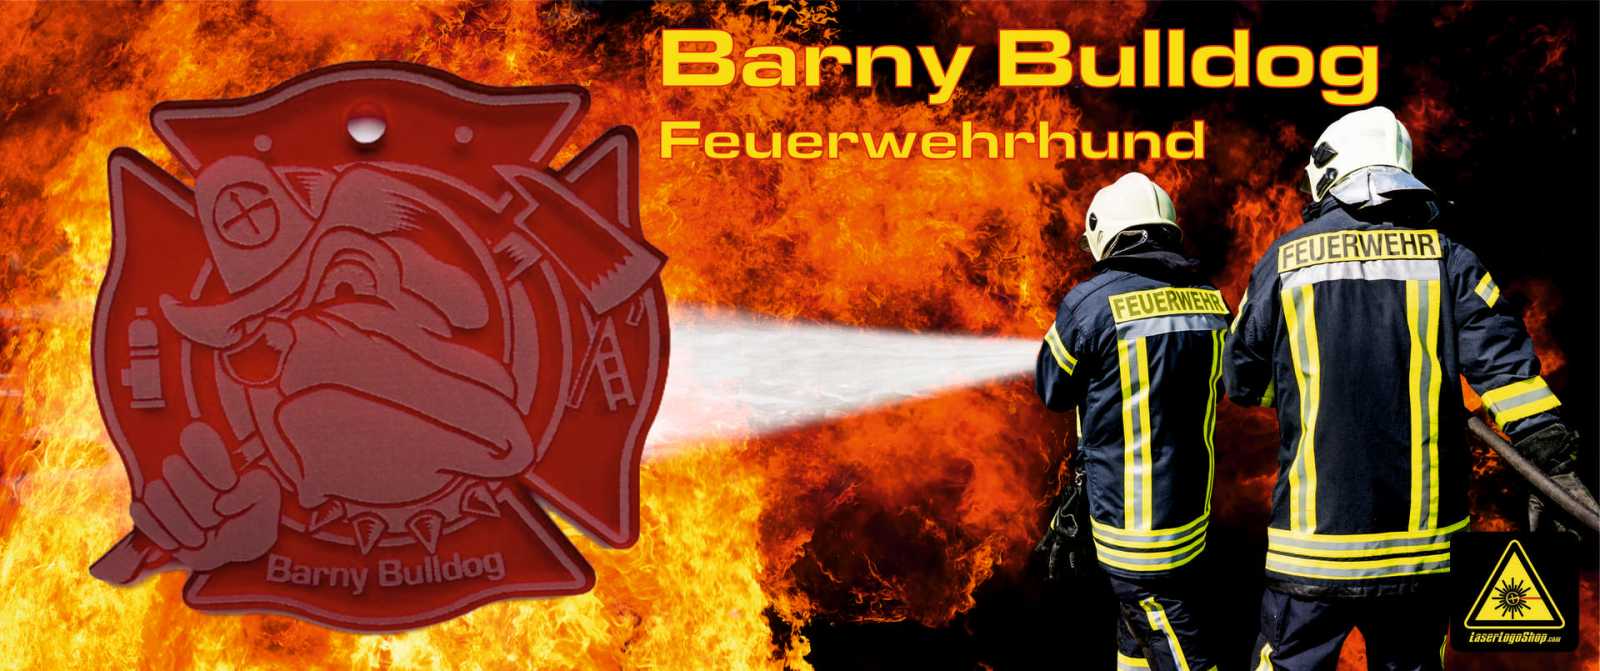 "Barny Bulldog - Feuerwehrhund"